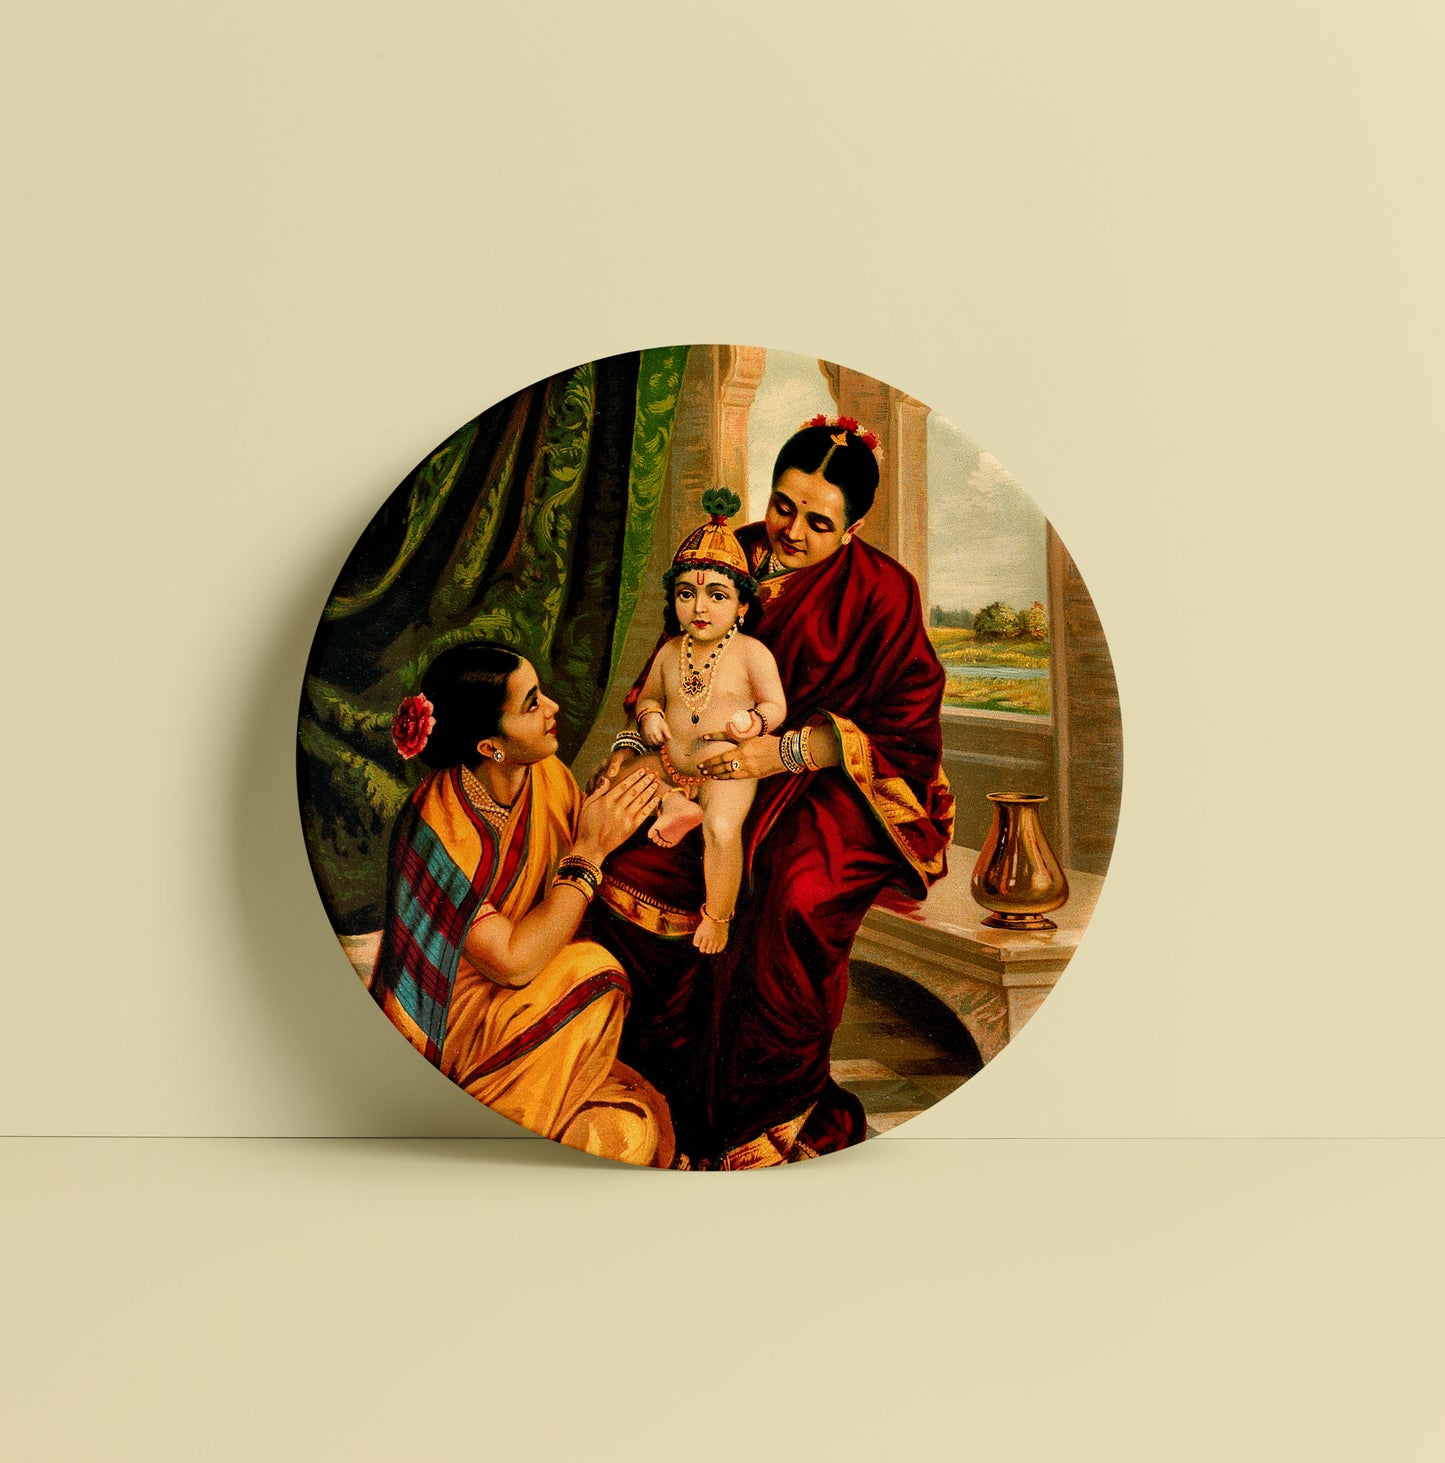 Krishna as an infant sitting on Yashoda's lap by Ravi Varma Ceramic Plate for Home Decor